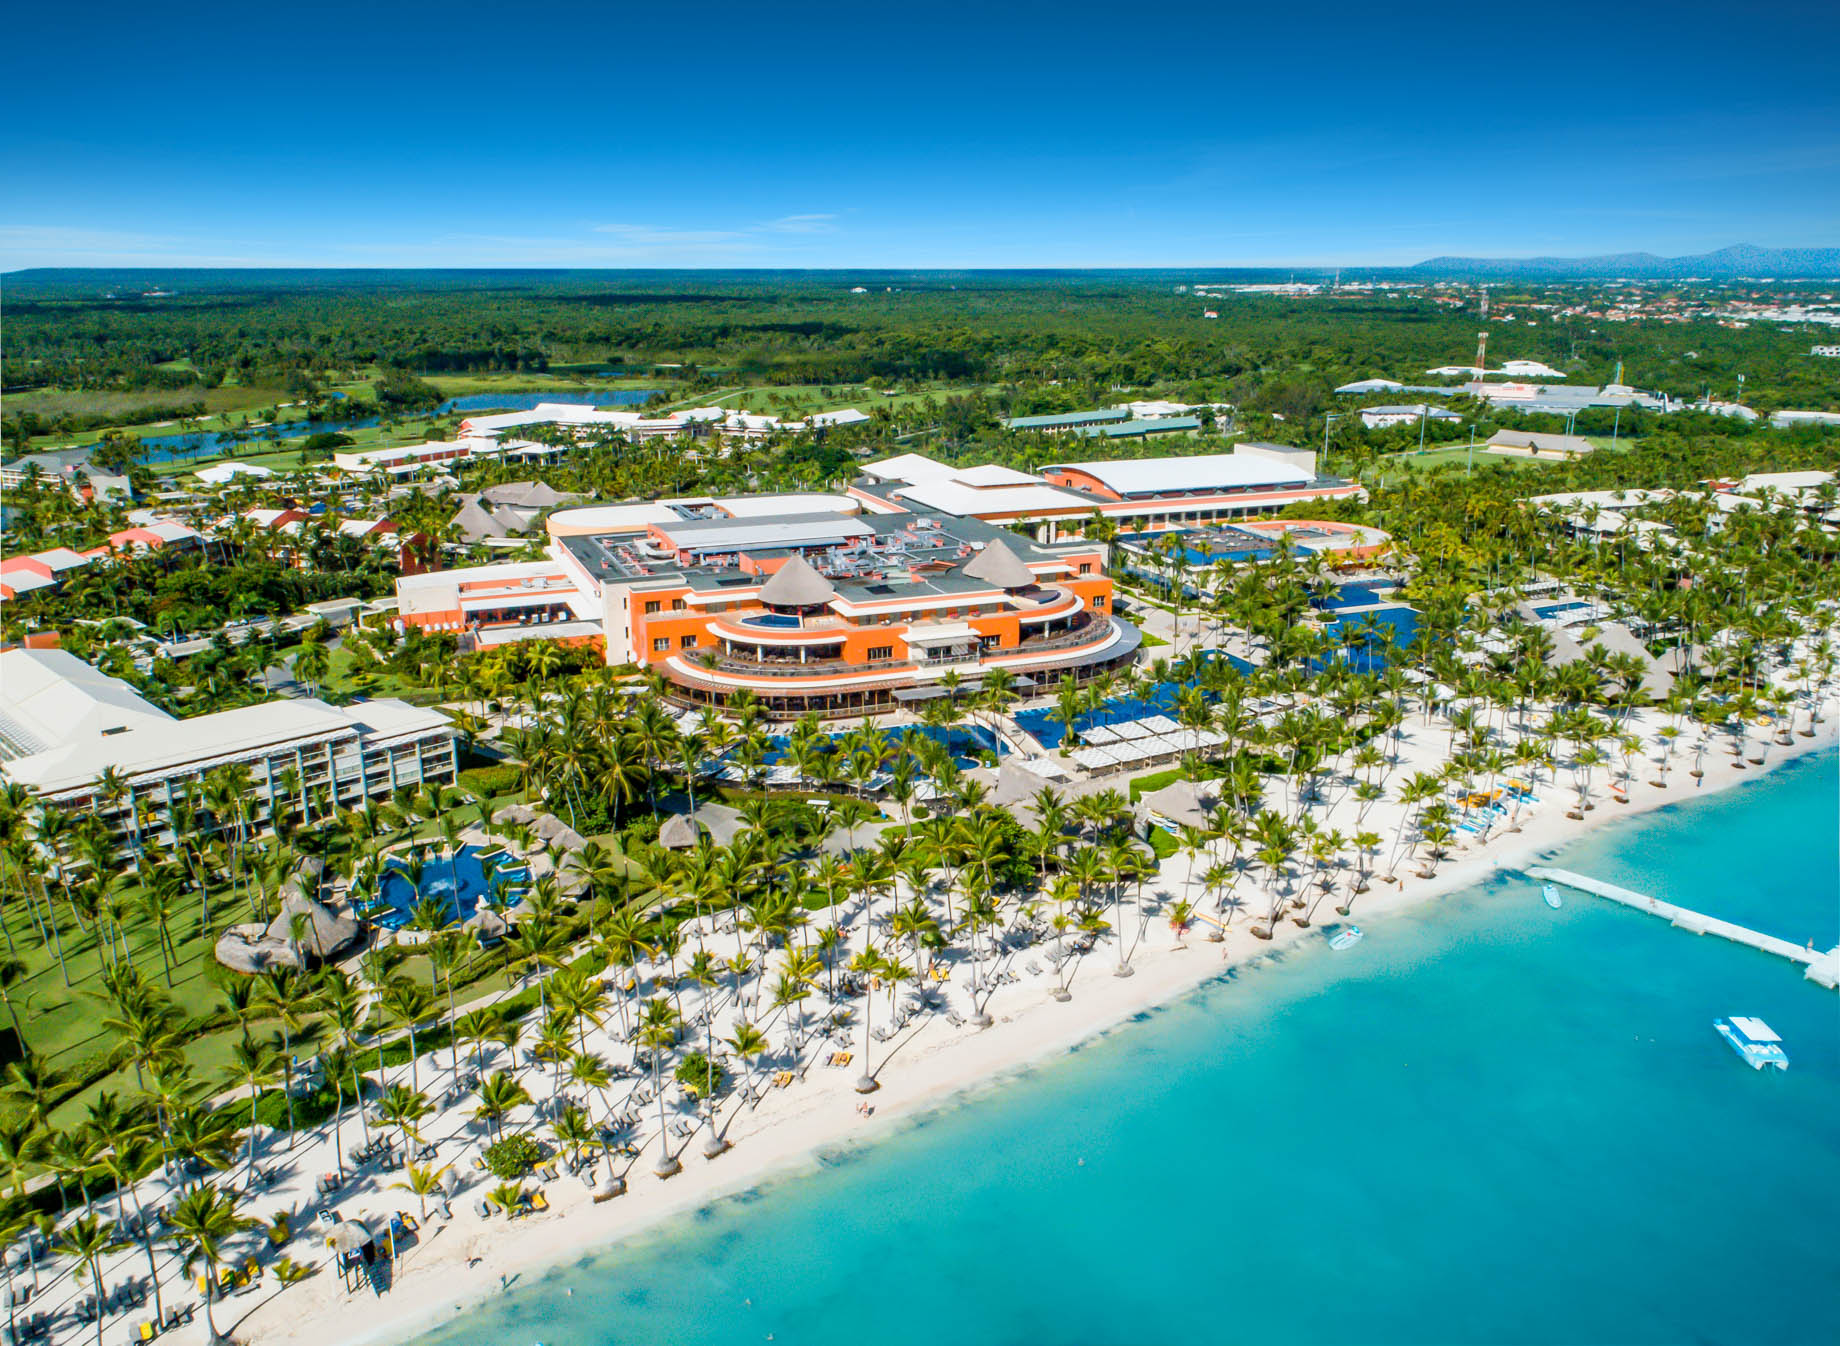 Barceló Bávaro Palace Hotel Grand Resort – Punta Cana, Dominican Republic – Aerial View